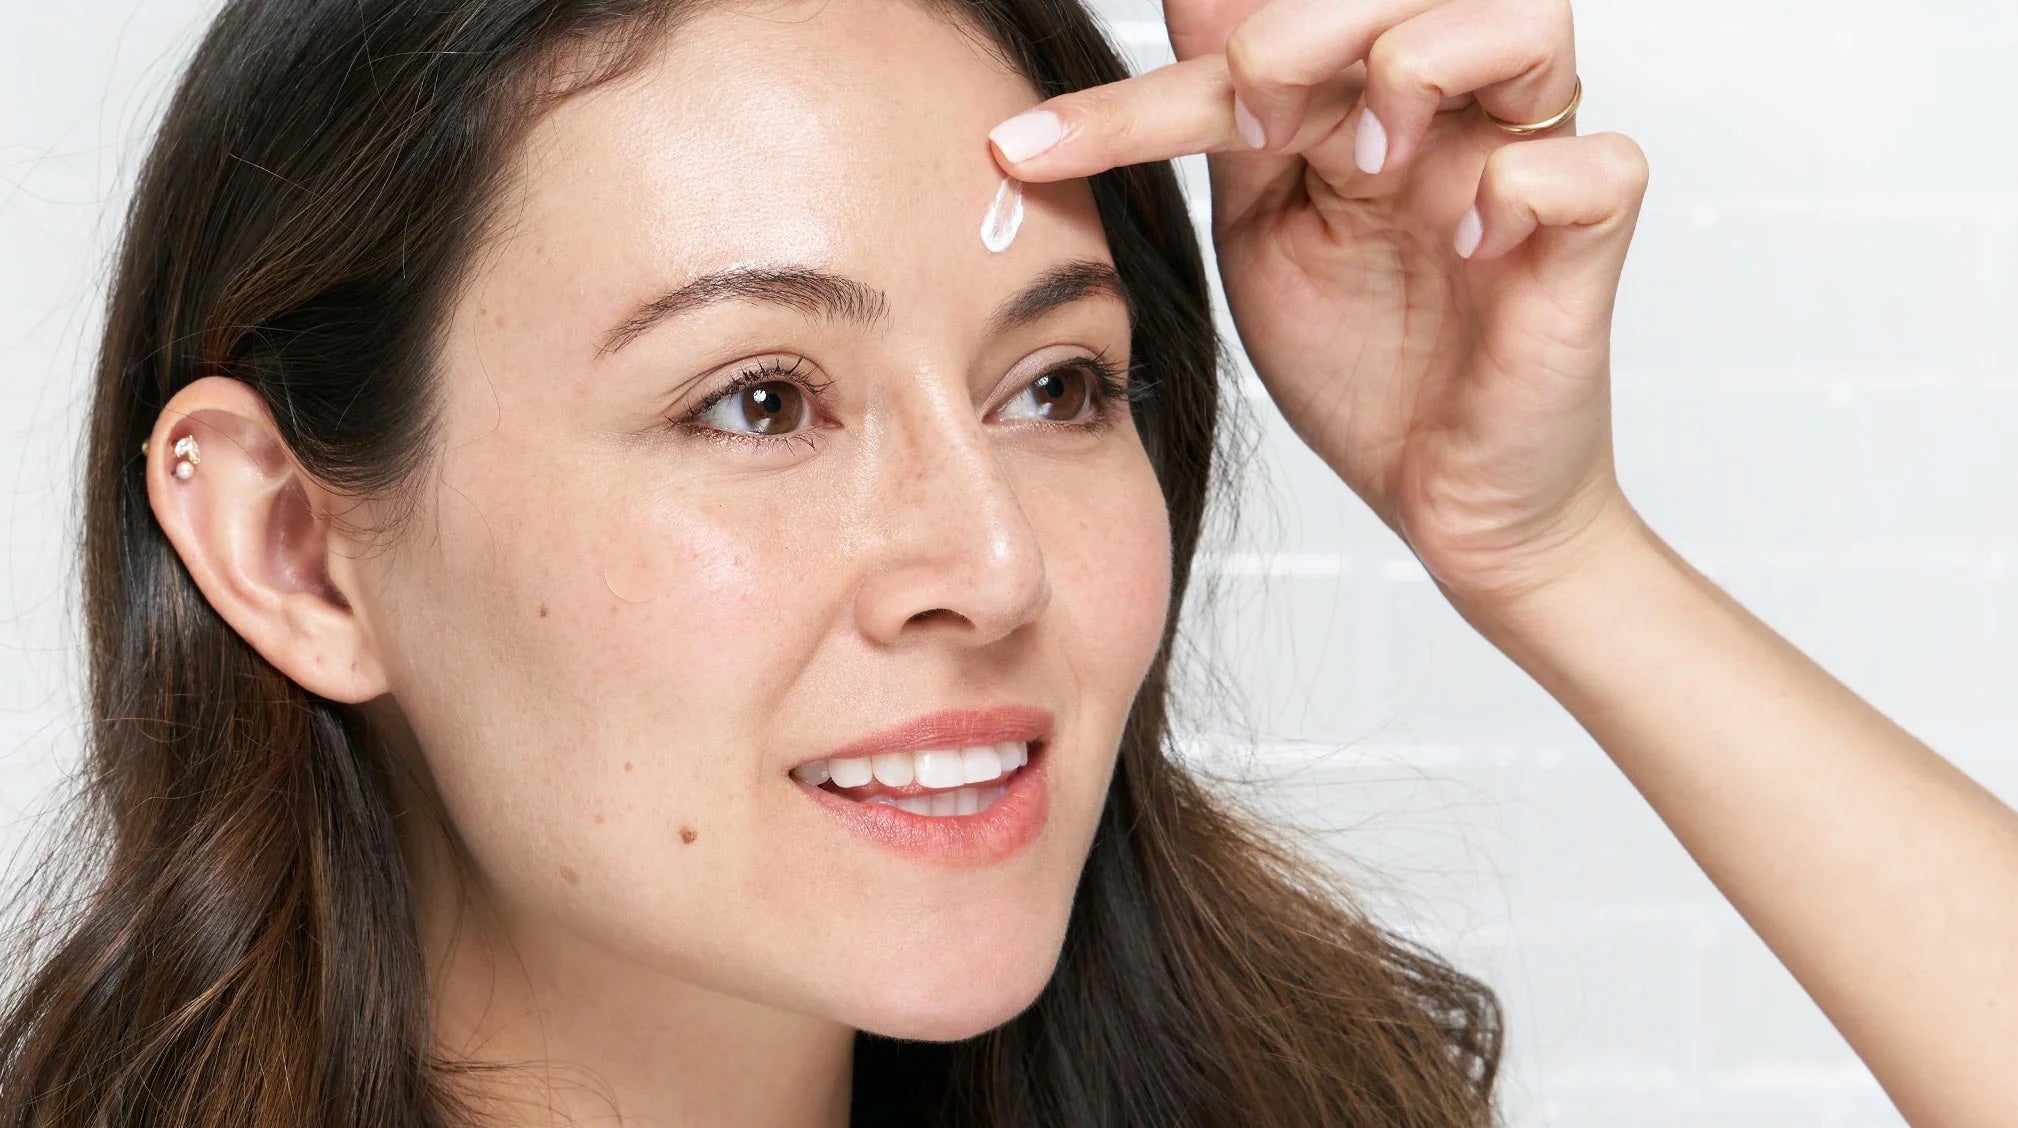 Your Go-To Acne Treatment? Calamine